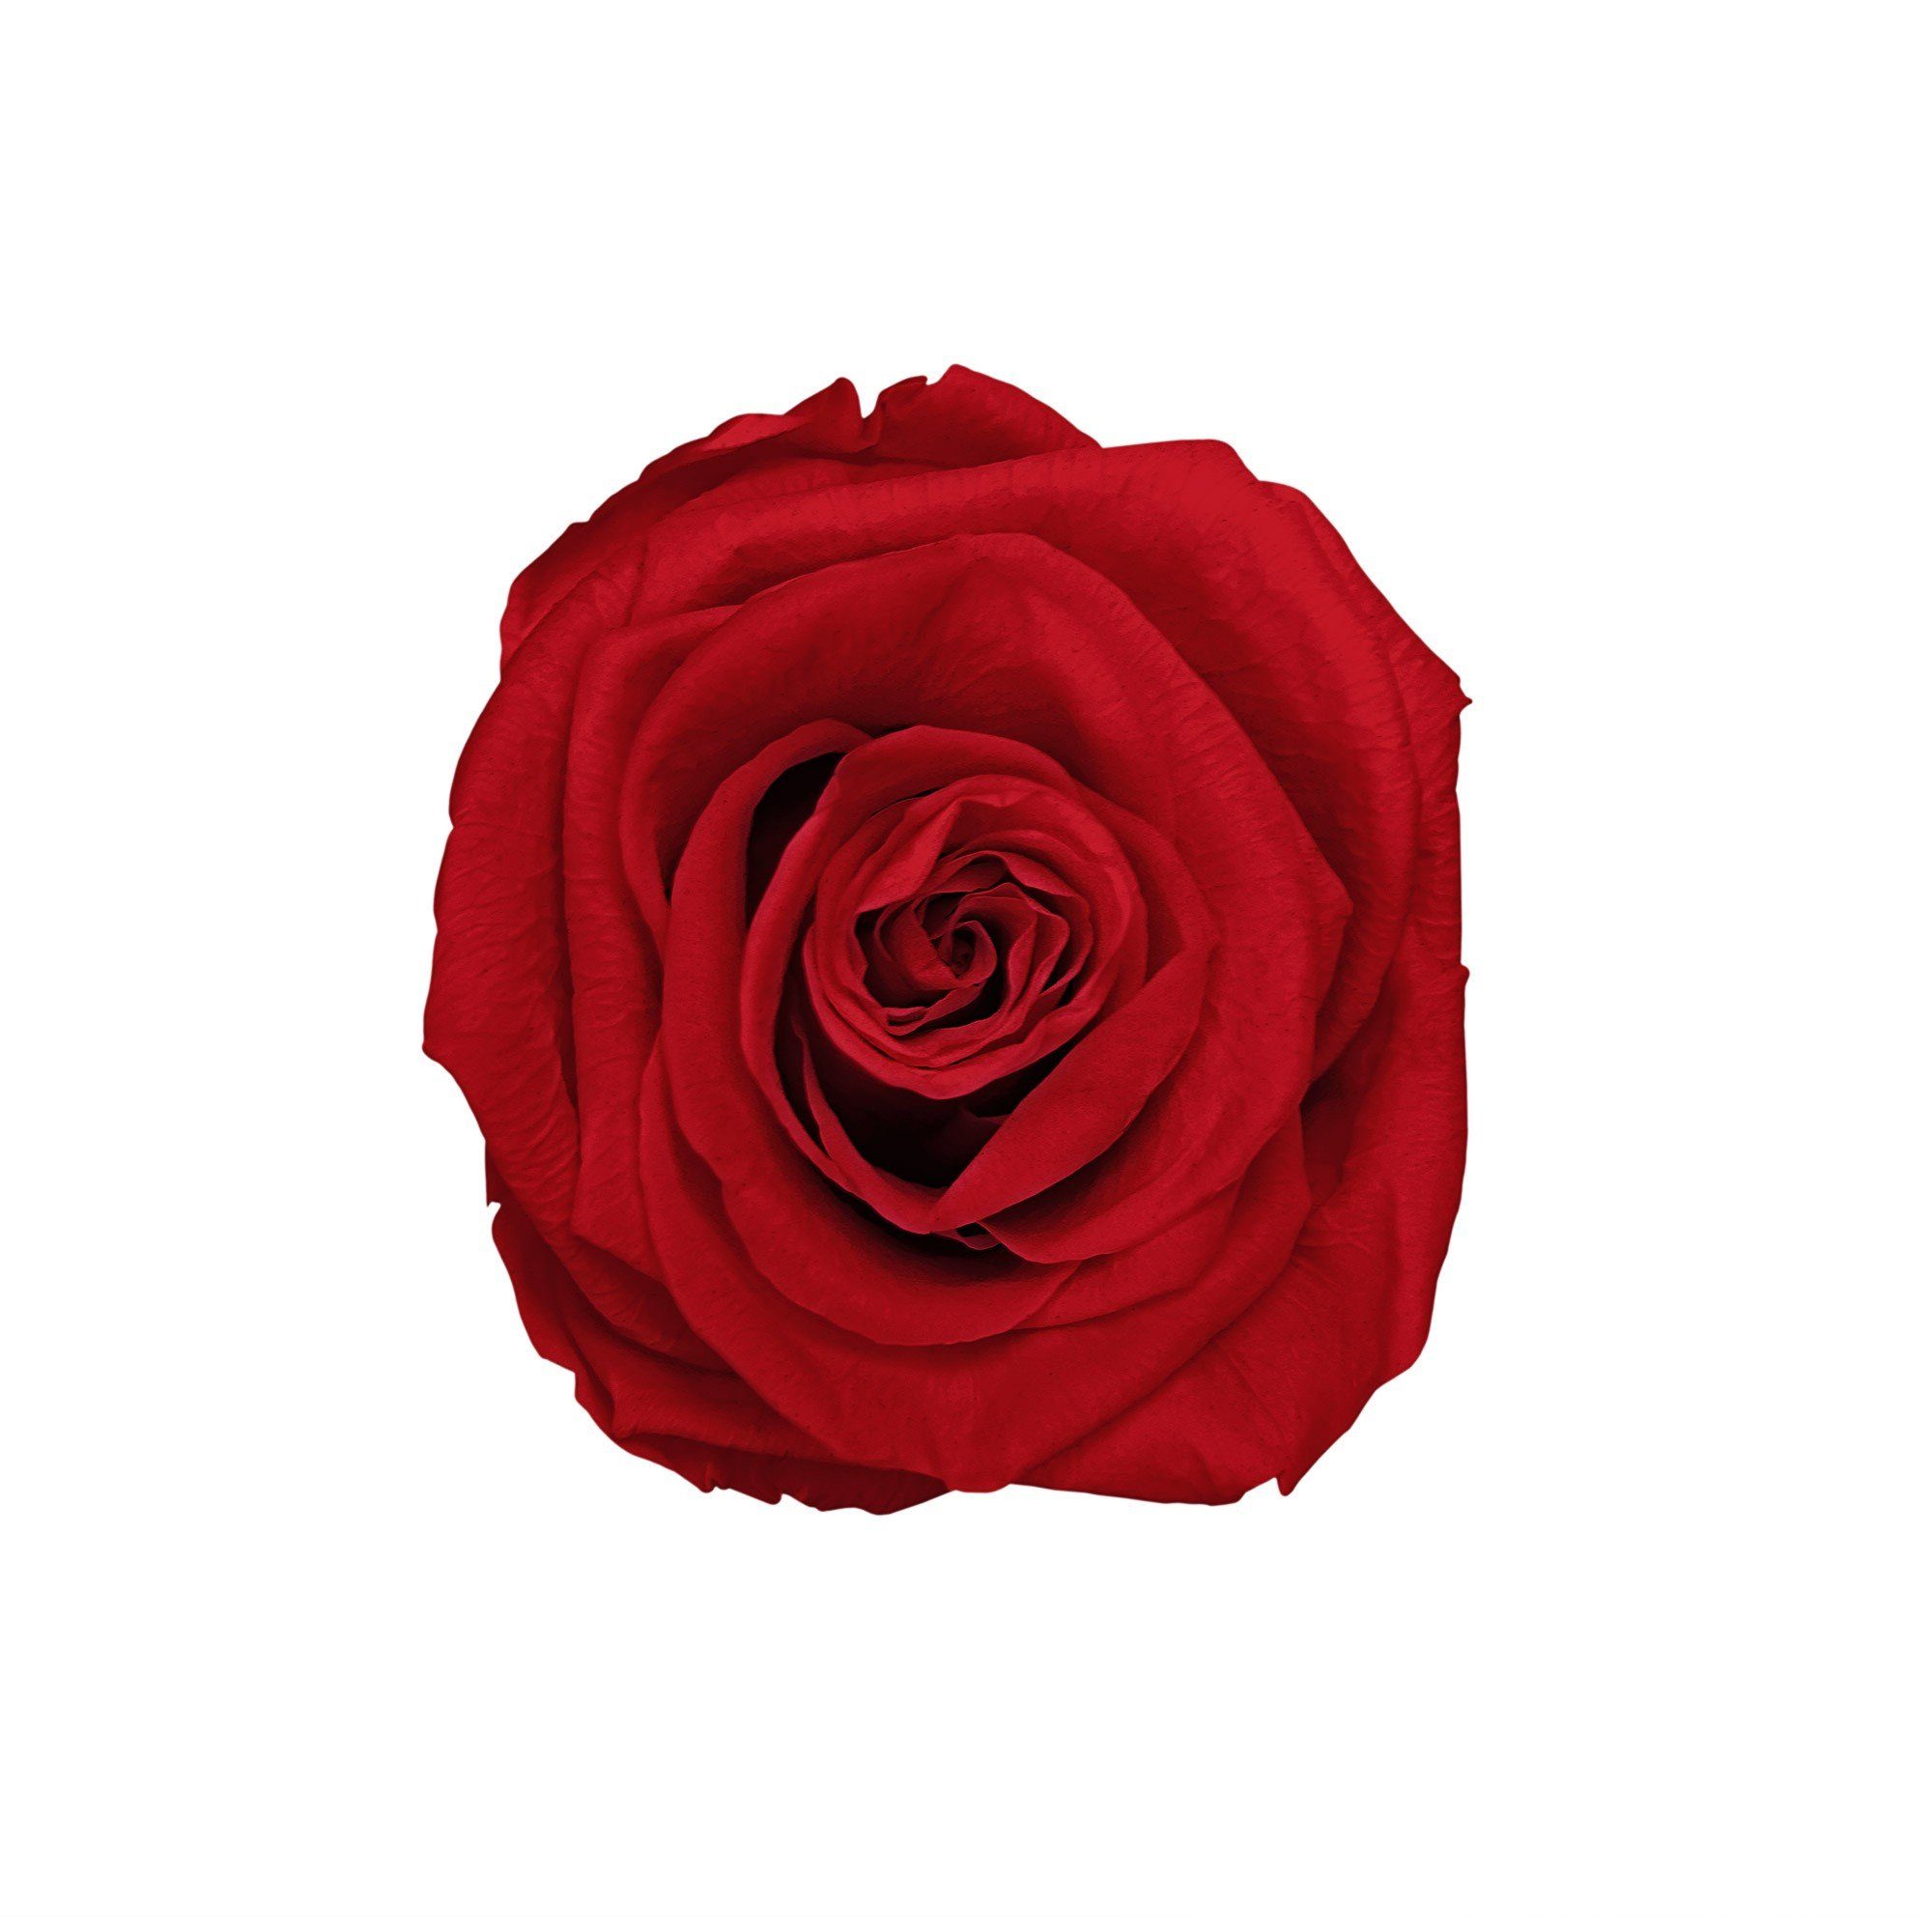 I by Kunstblume Infinity Red Rosenbox mit Heritage Eckige I cm Rose I in konservierte Rose, 1er Jahre Blumen Richter Höhe 3 haltbar Flowers, weiß Infinity duftende Holy Raul Echte, 9